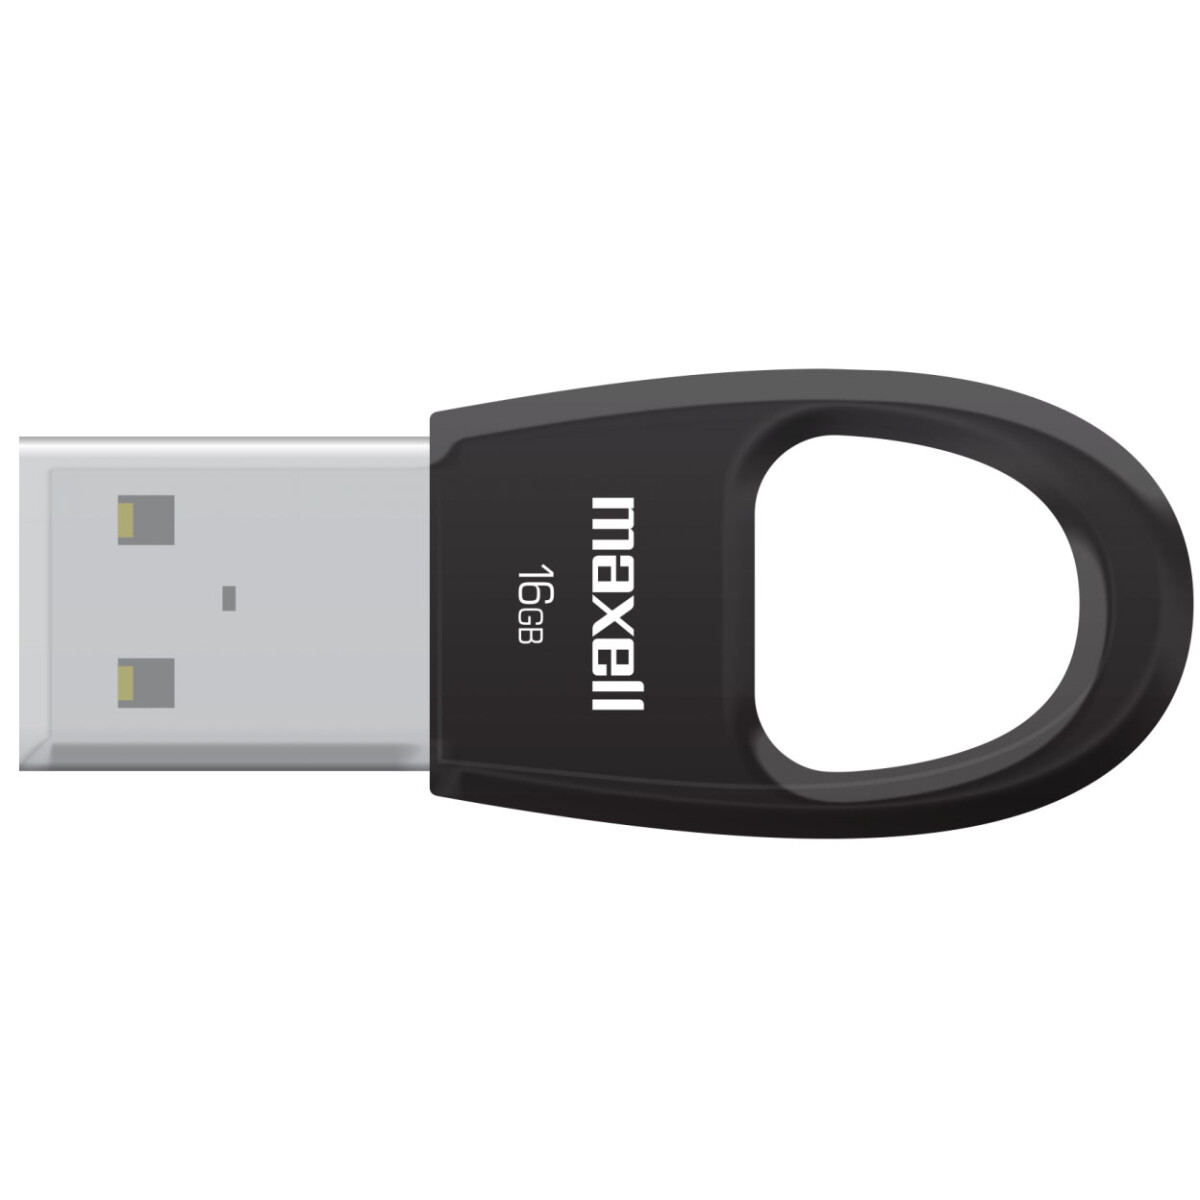 Pendrive Maxell Key 64GB USB 2.0 - 001 